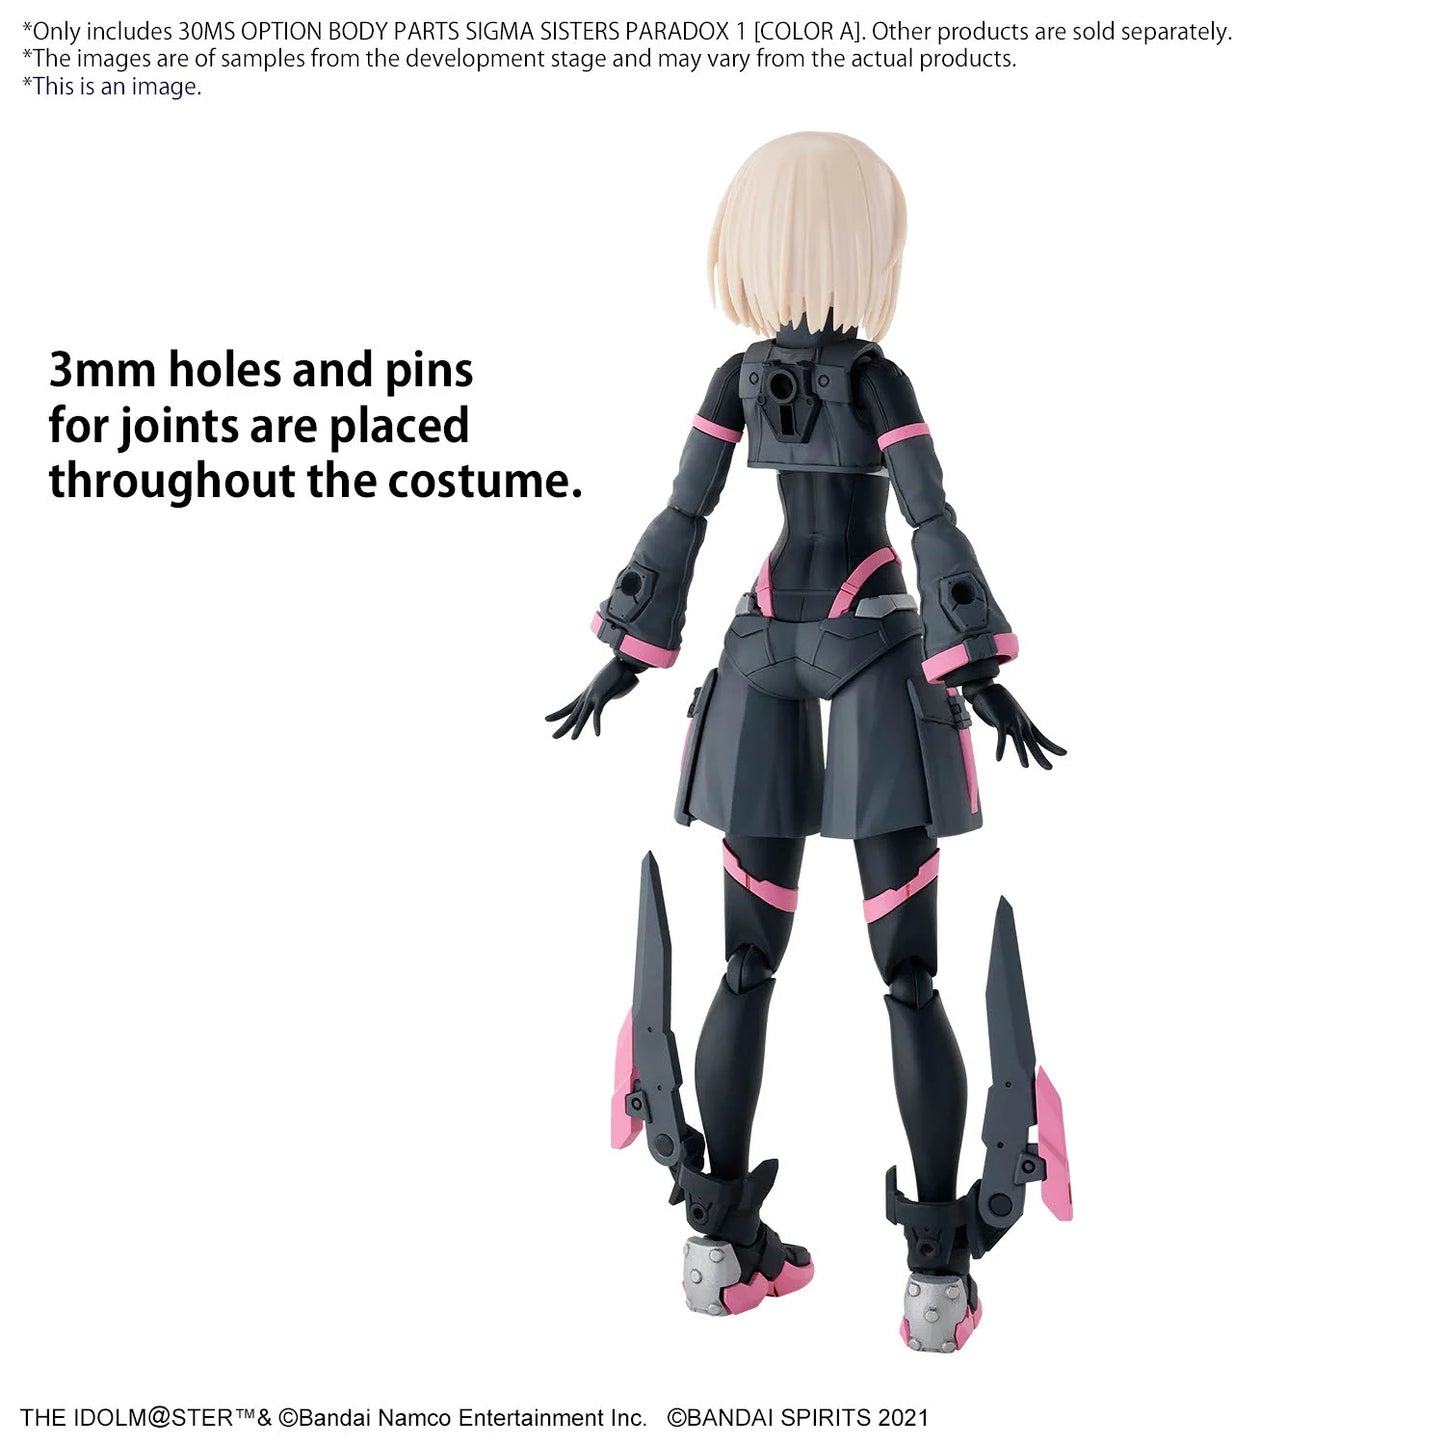 30MS - The Idolmaster Option body parts Sigma sister paradox 1